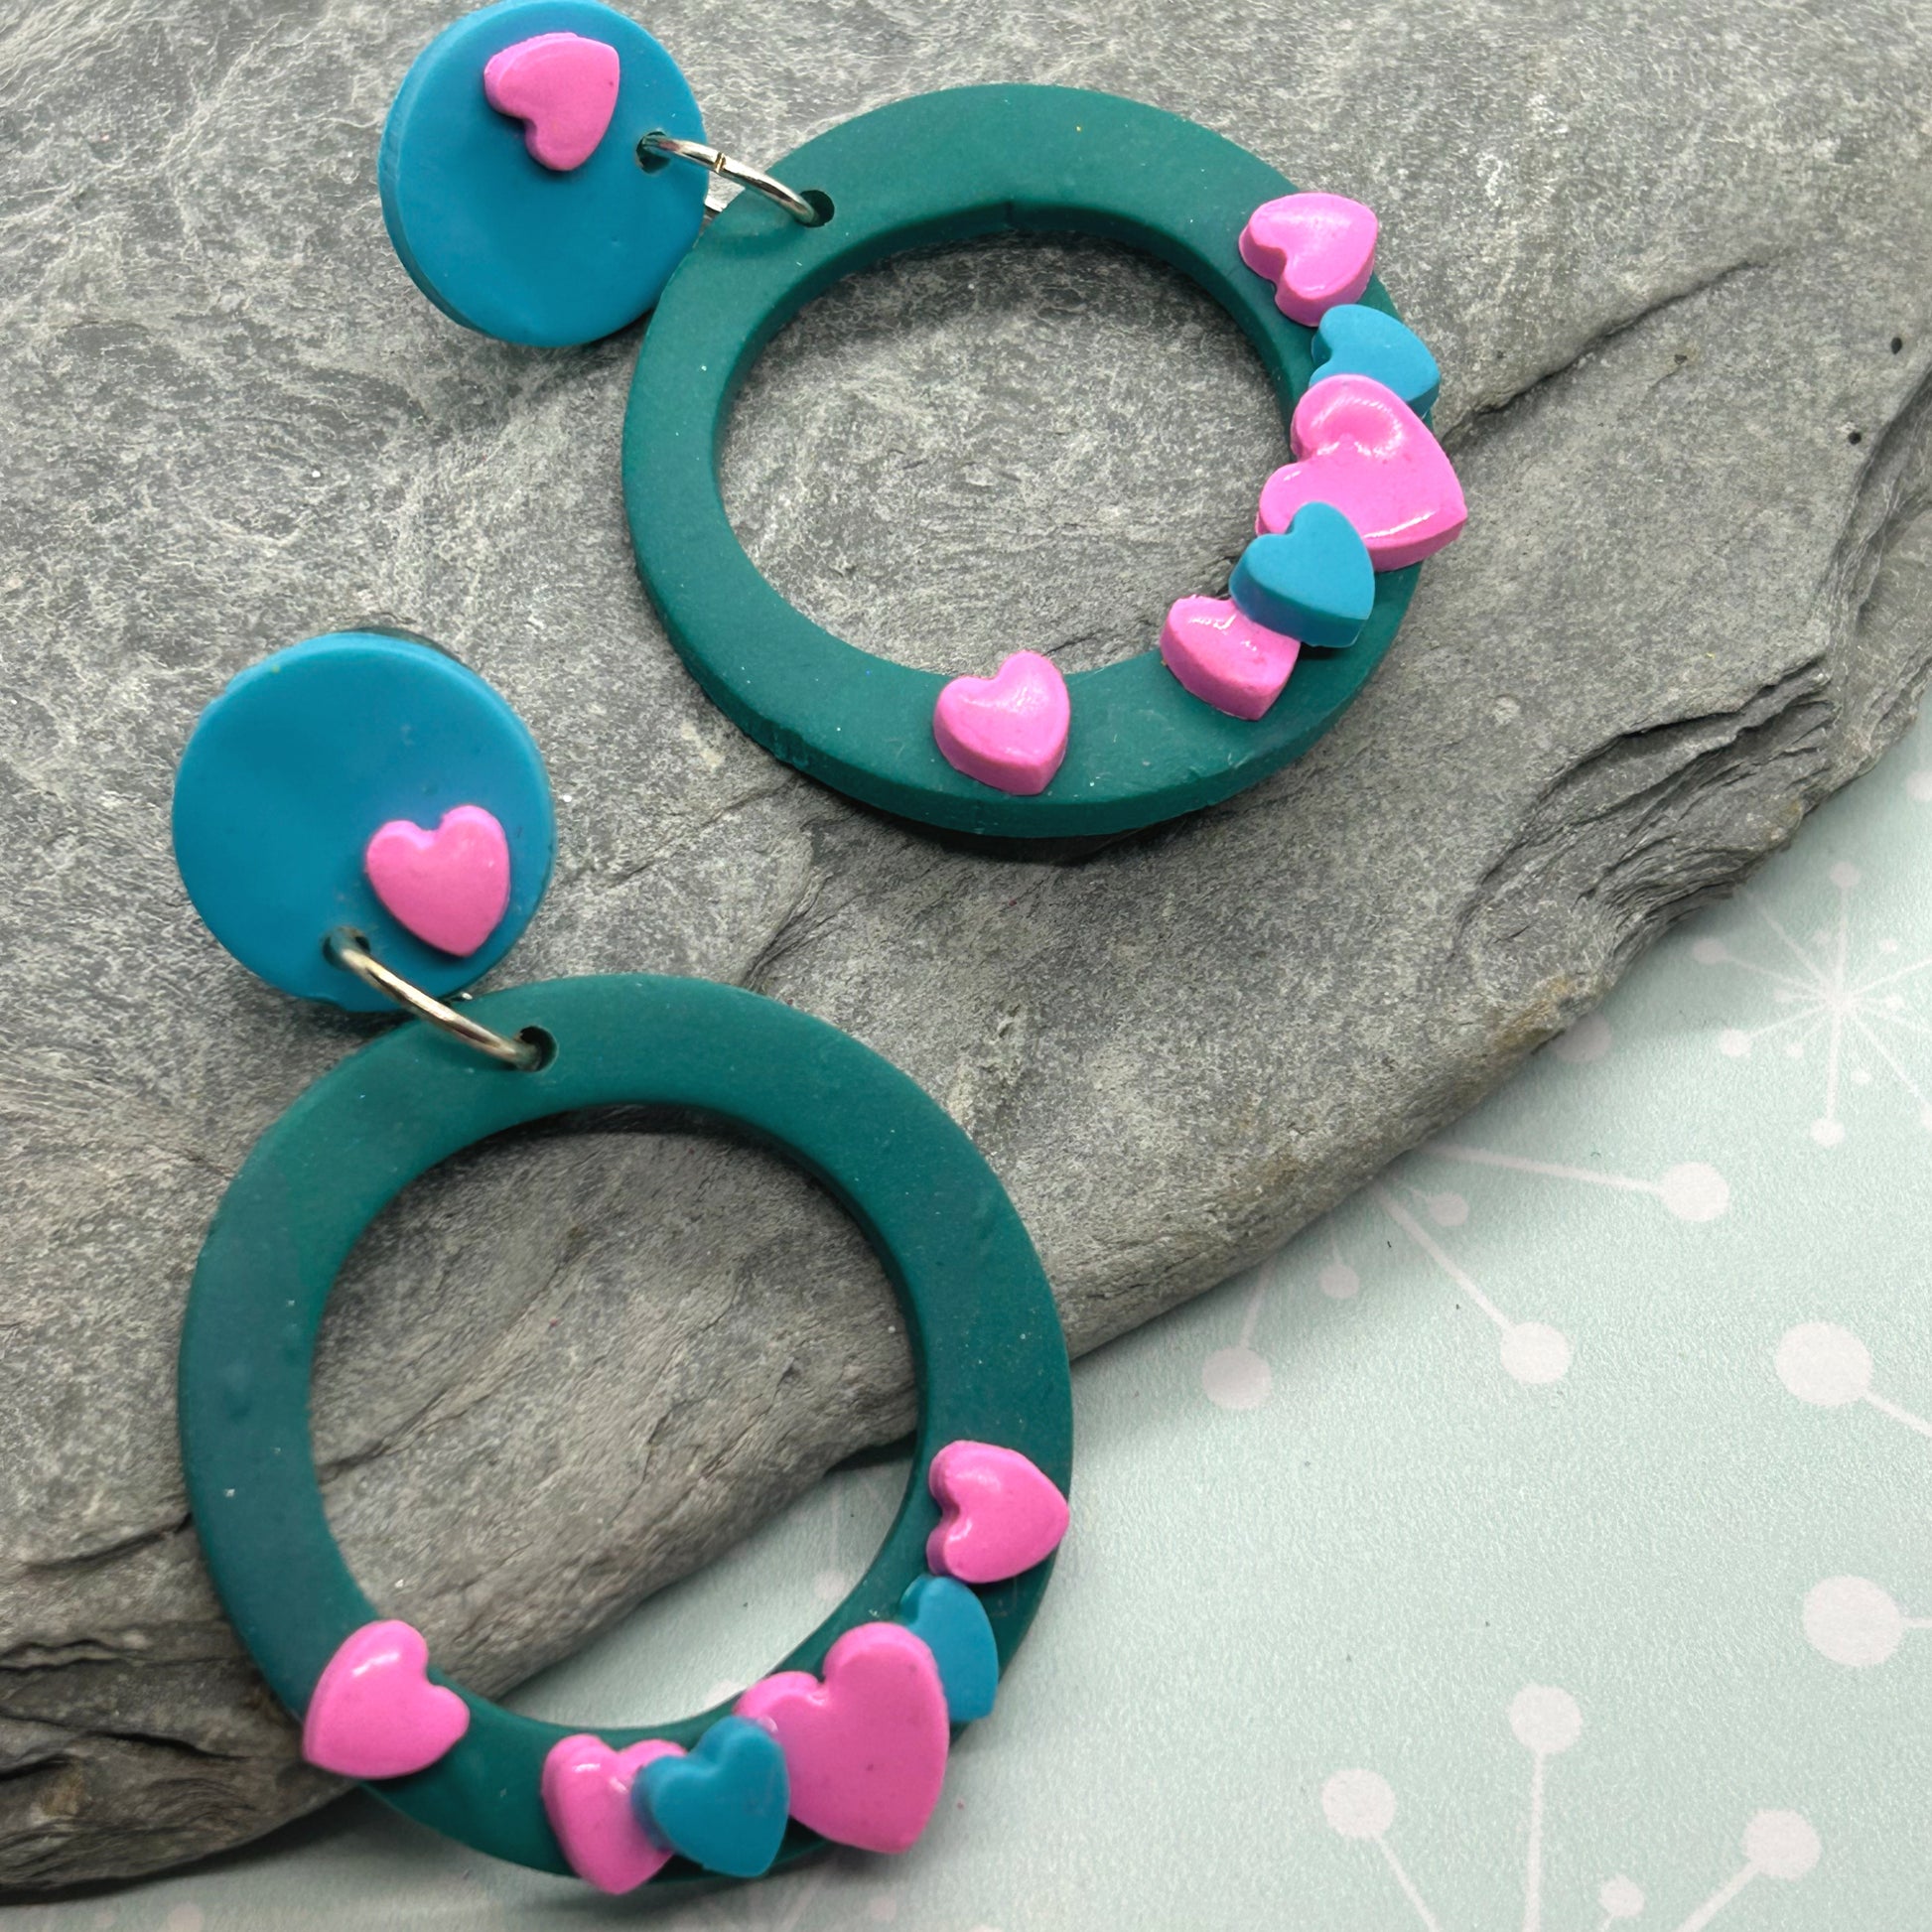 Love heart hoops earrings - The Argentum Design Co